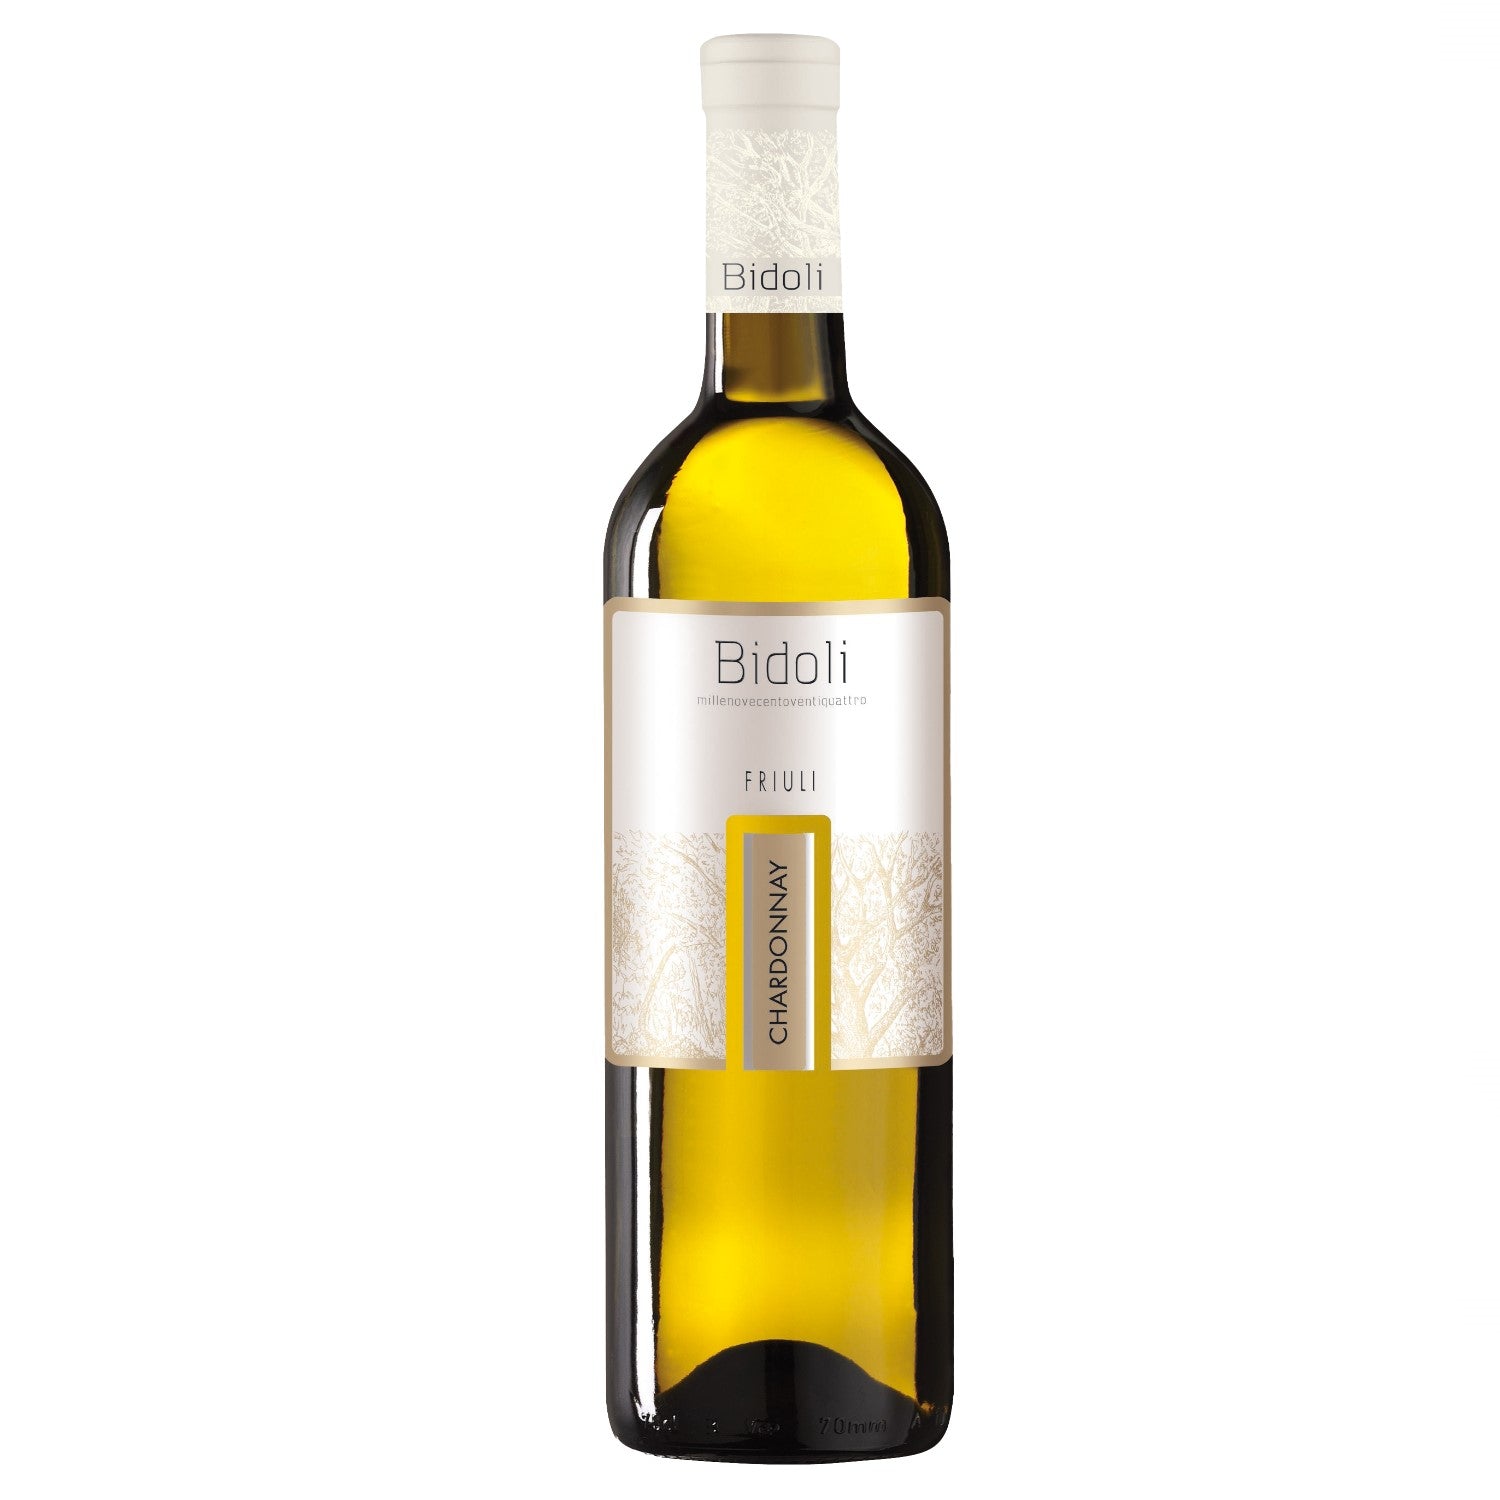 Bidoli Vini Chardonnay DOC Friuli Grave Weißwein Wein trocken Italien (3 x 0.75l) - Versanel -